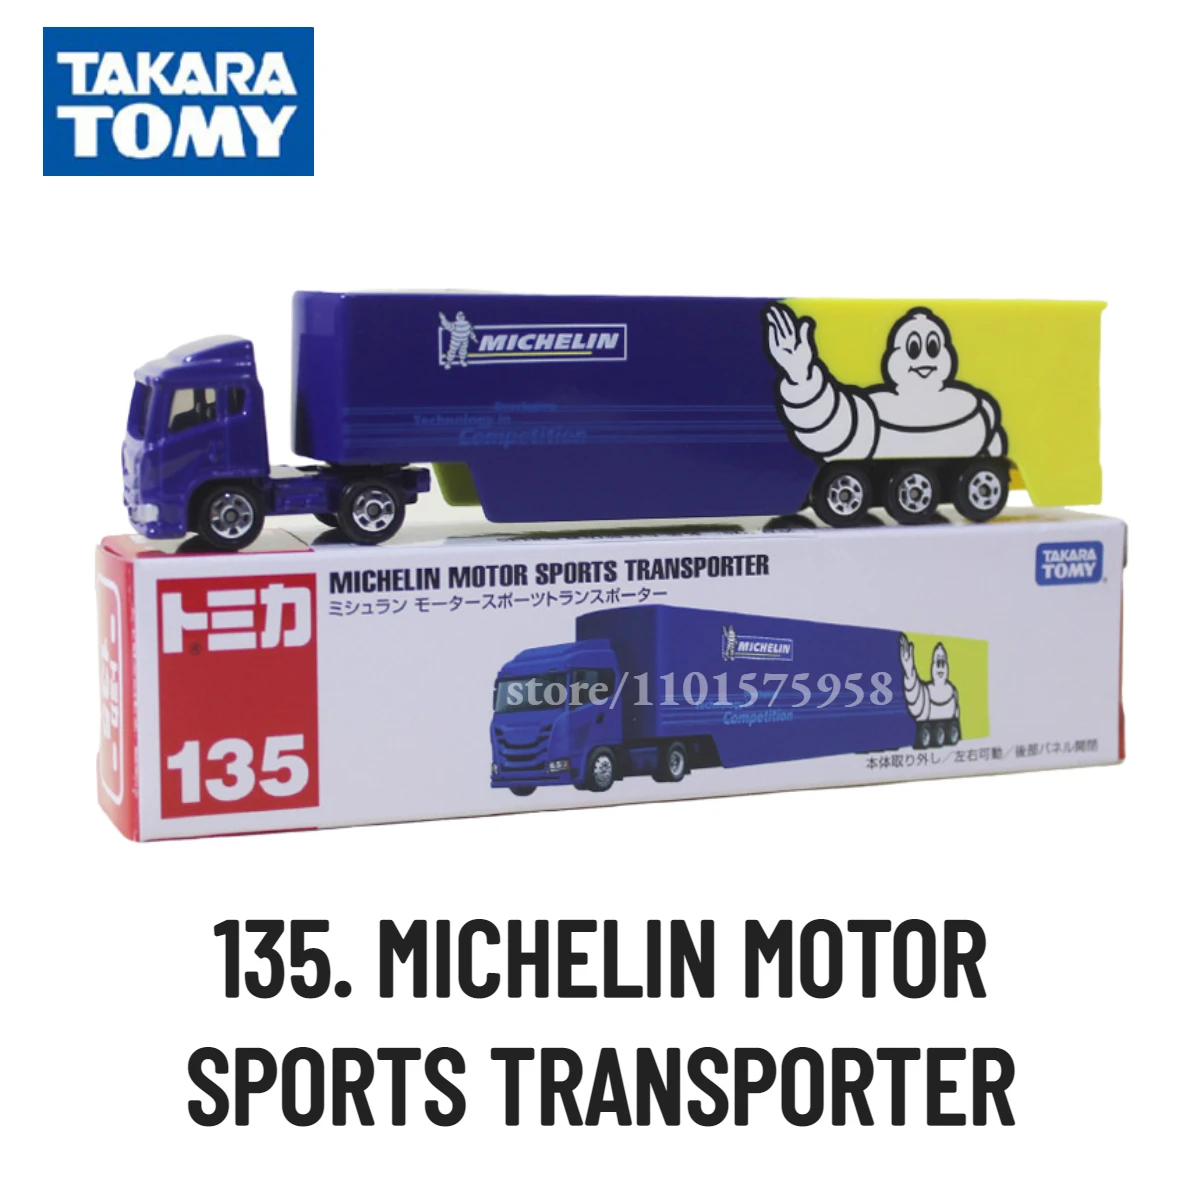 Takara Tomy Tomica Trailer, 135. MICHELIN MOTOR SPORTS TRANSPORTER Scale Truck Car Model Miniature Toy for Boy